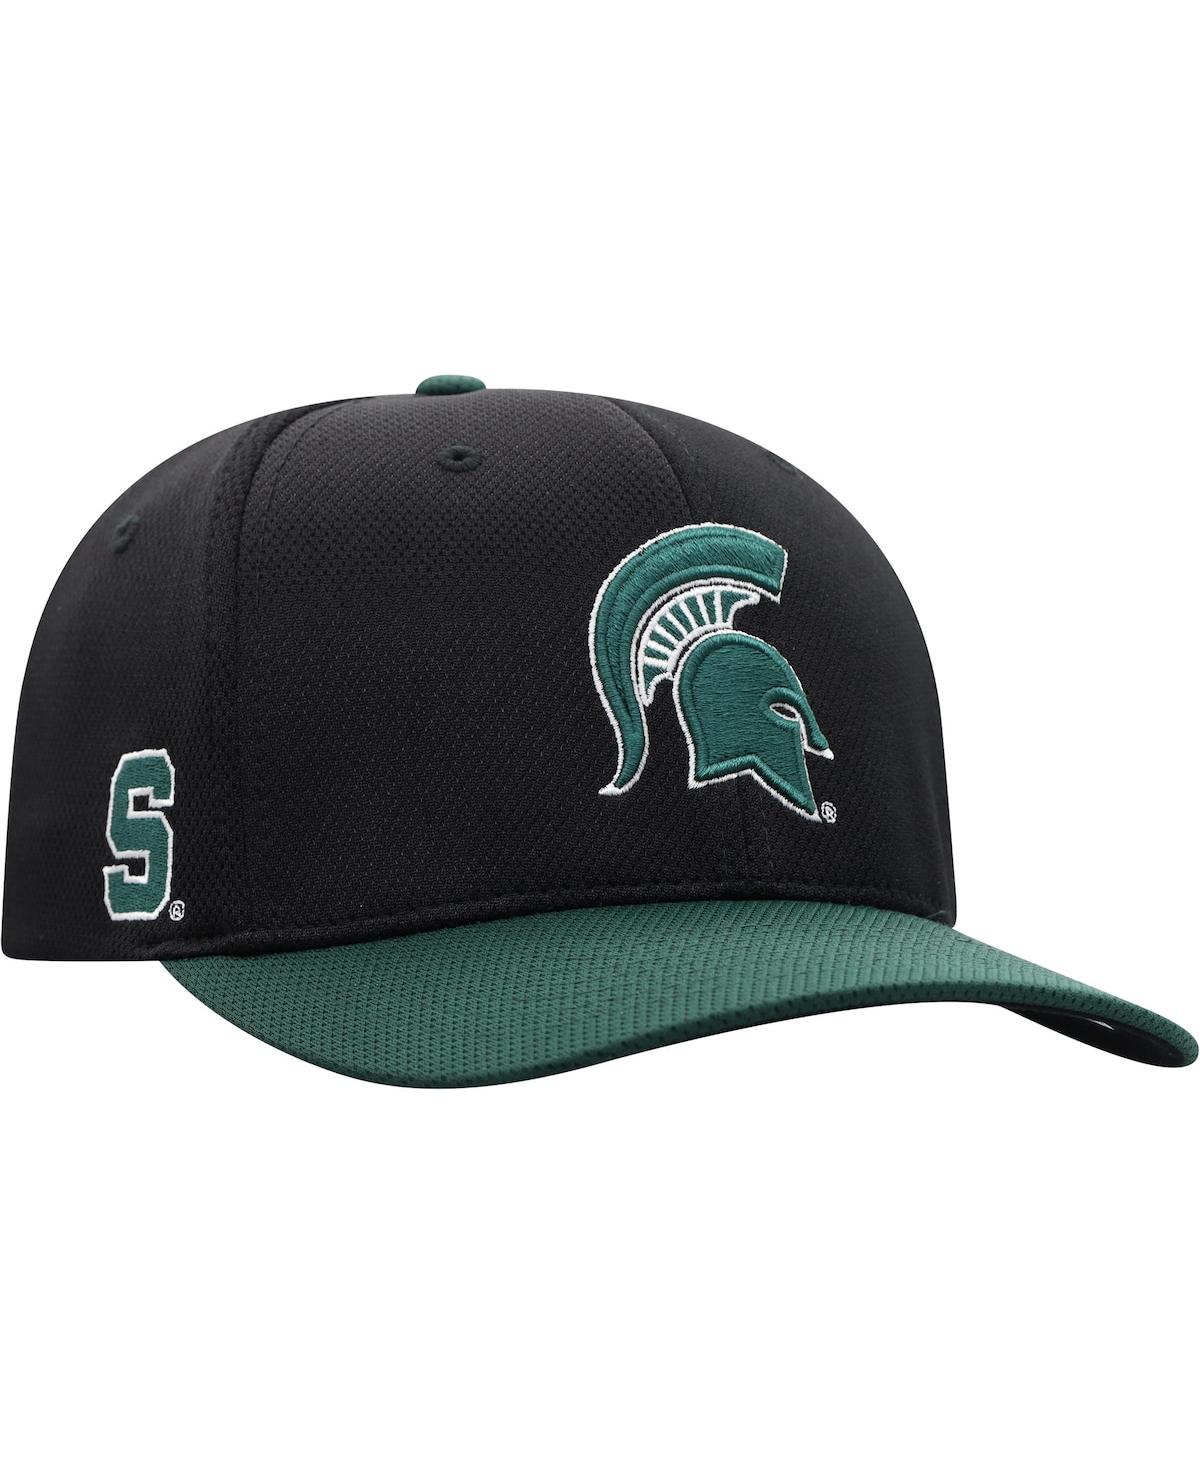 Shop Top Of The World Men's  Black, Green Michigan State Spartans Two-tone Reflex Hybrid Tech Flex Hat